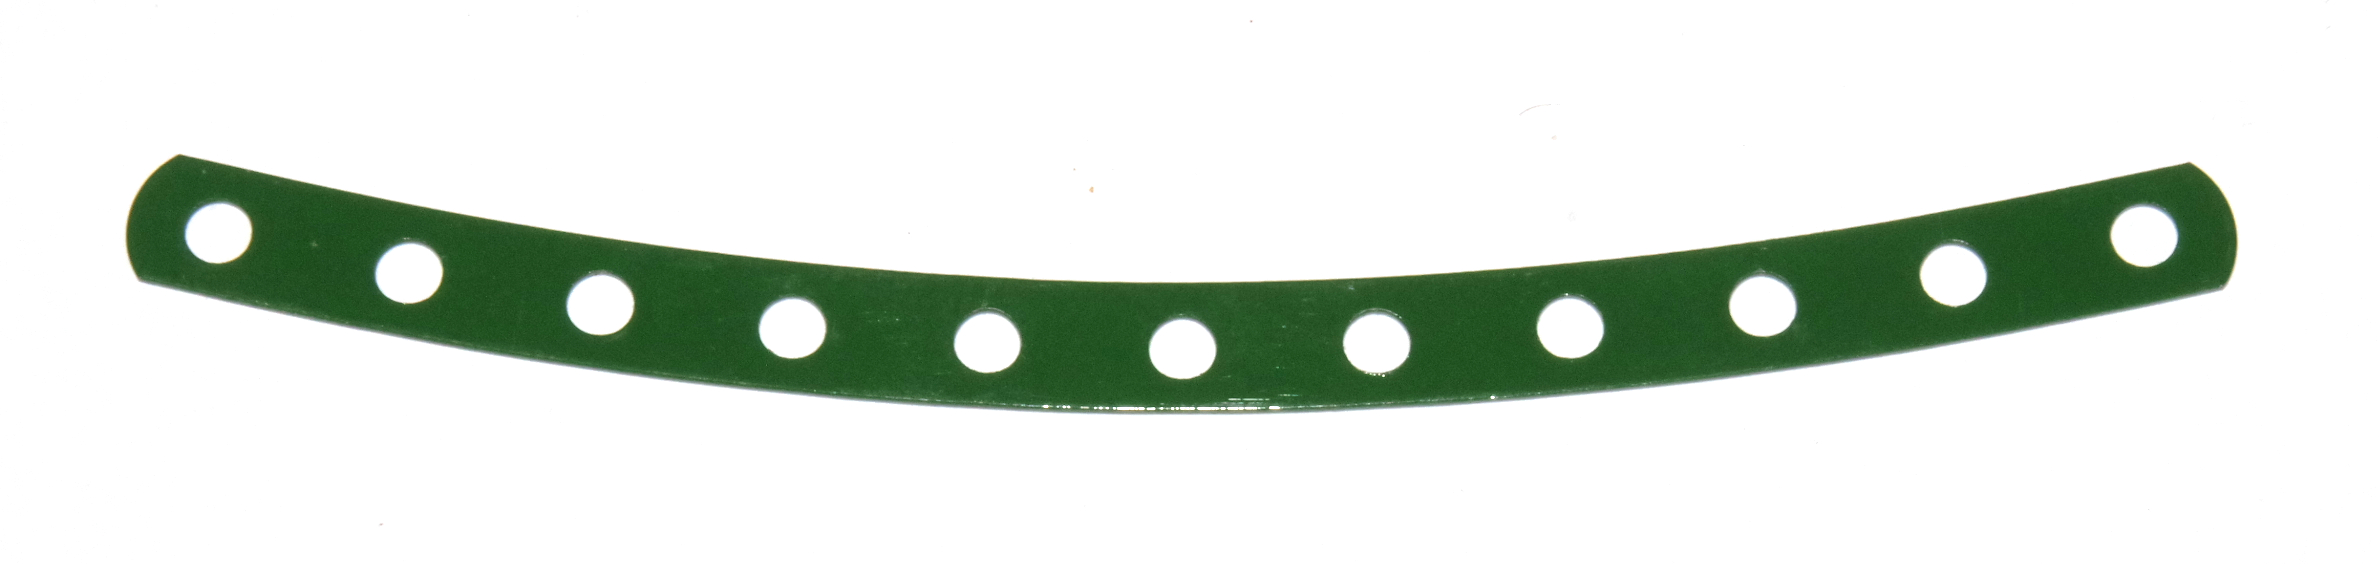 273c Narrow Curved Strip 11 Hole Green